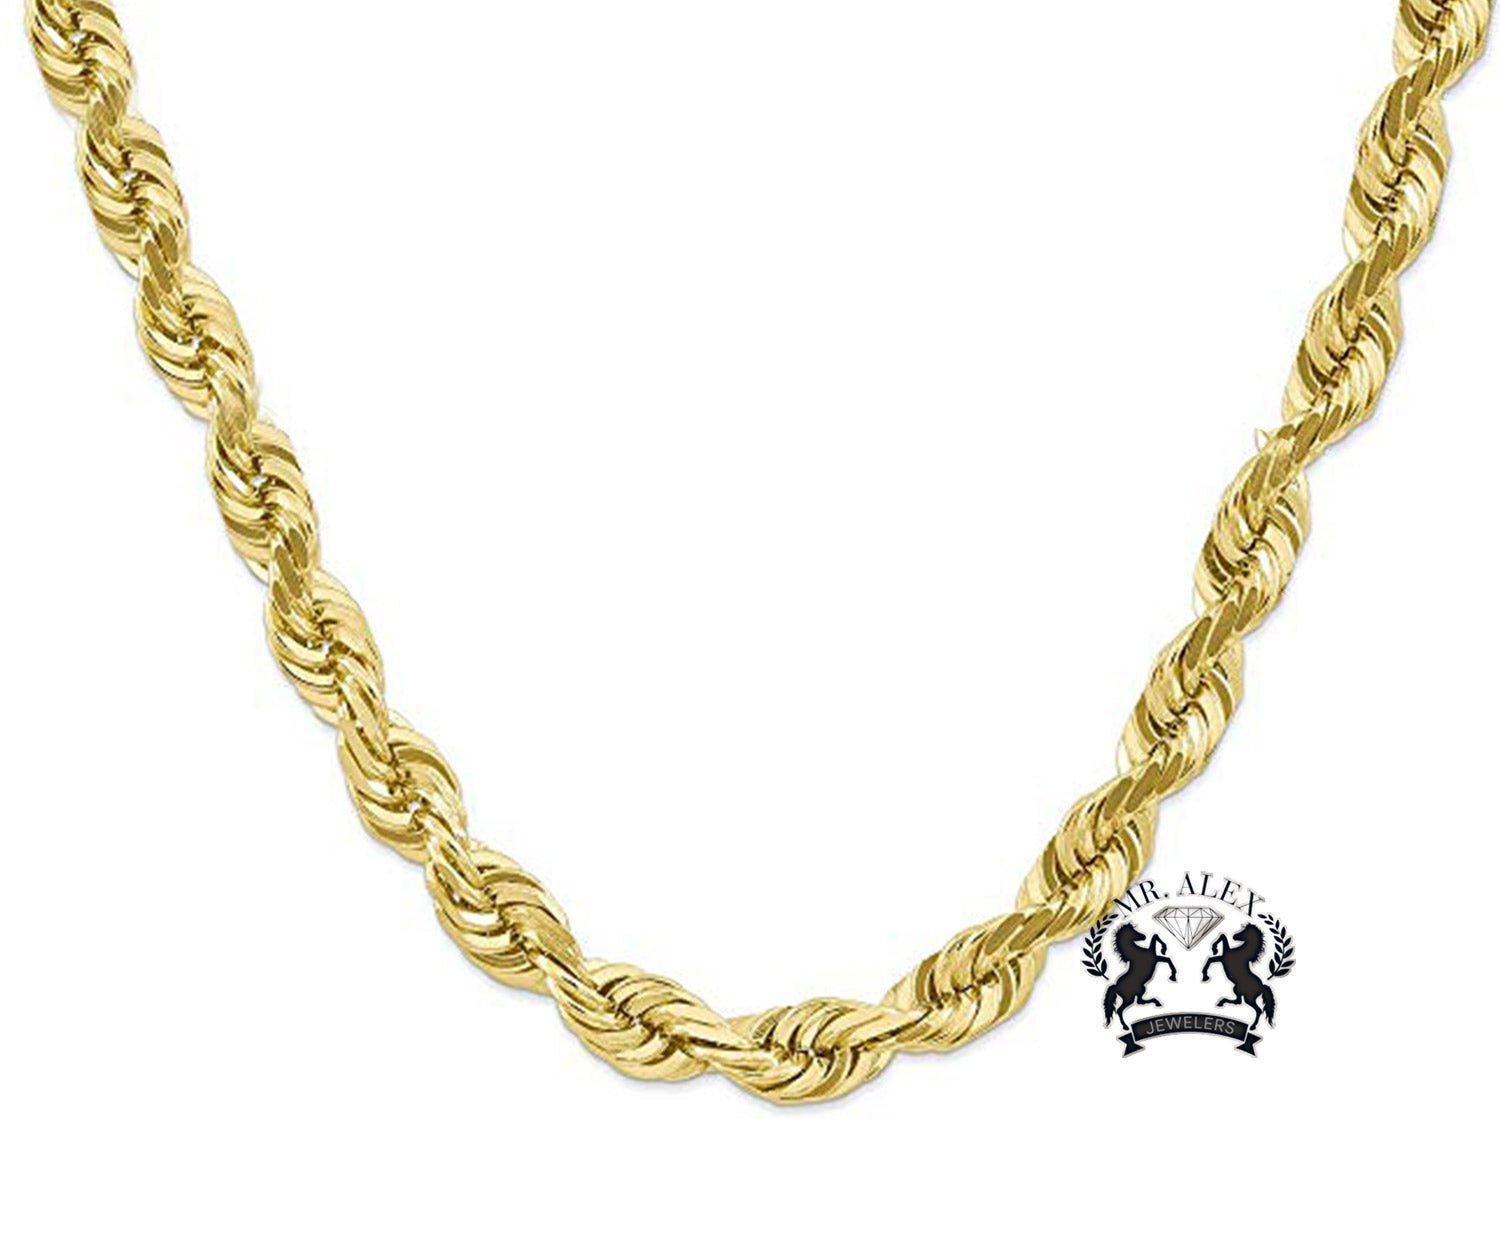 Gold Chains - Mr. Alex Jewelry